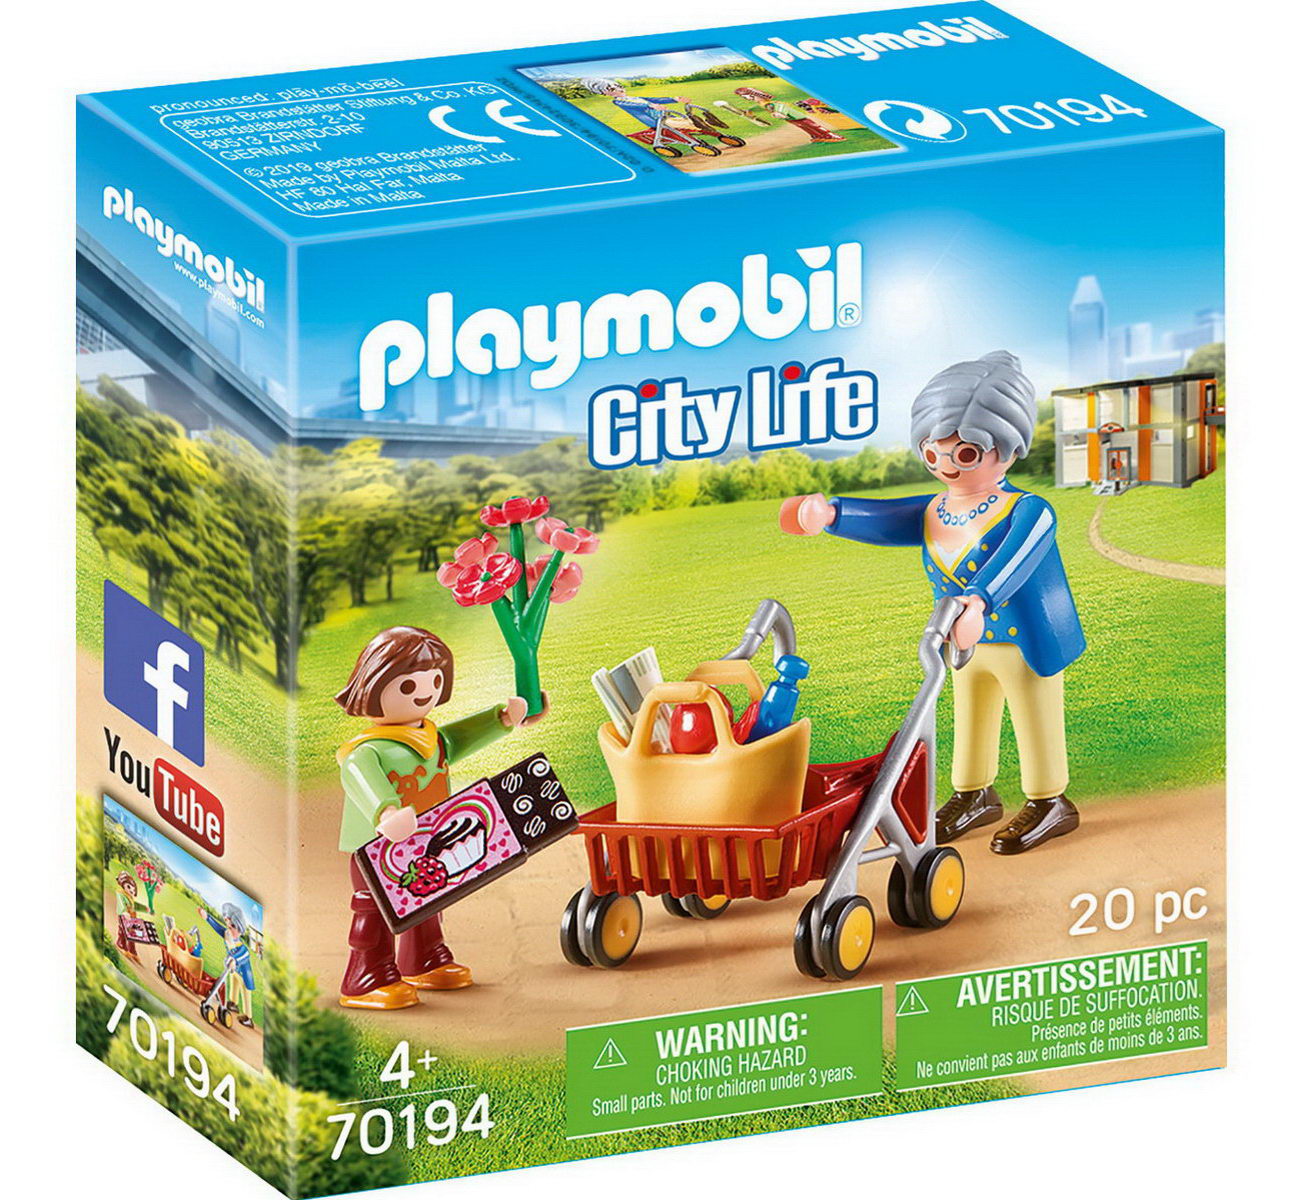 Playmobil 70194 - Oma mit Rollator